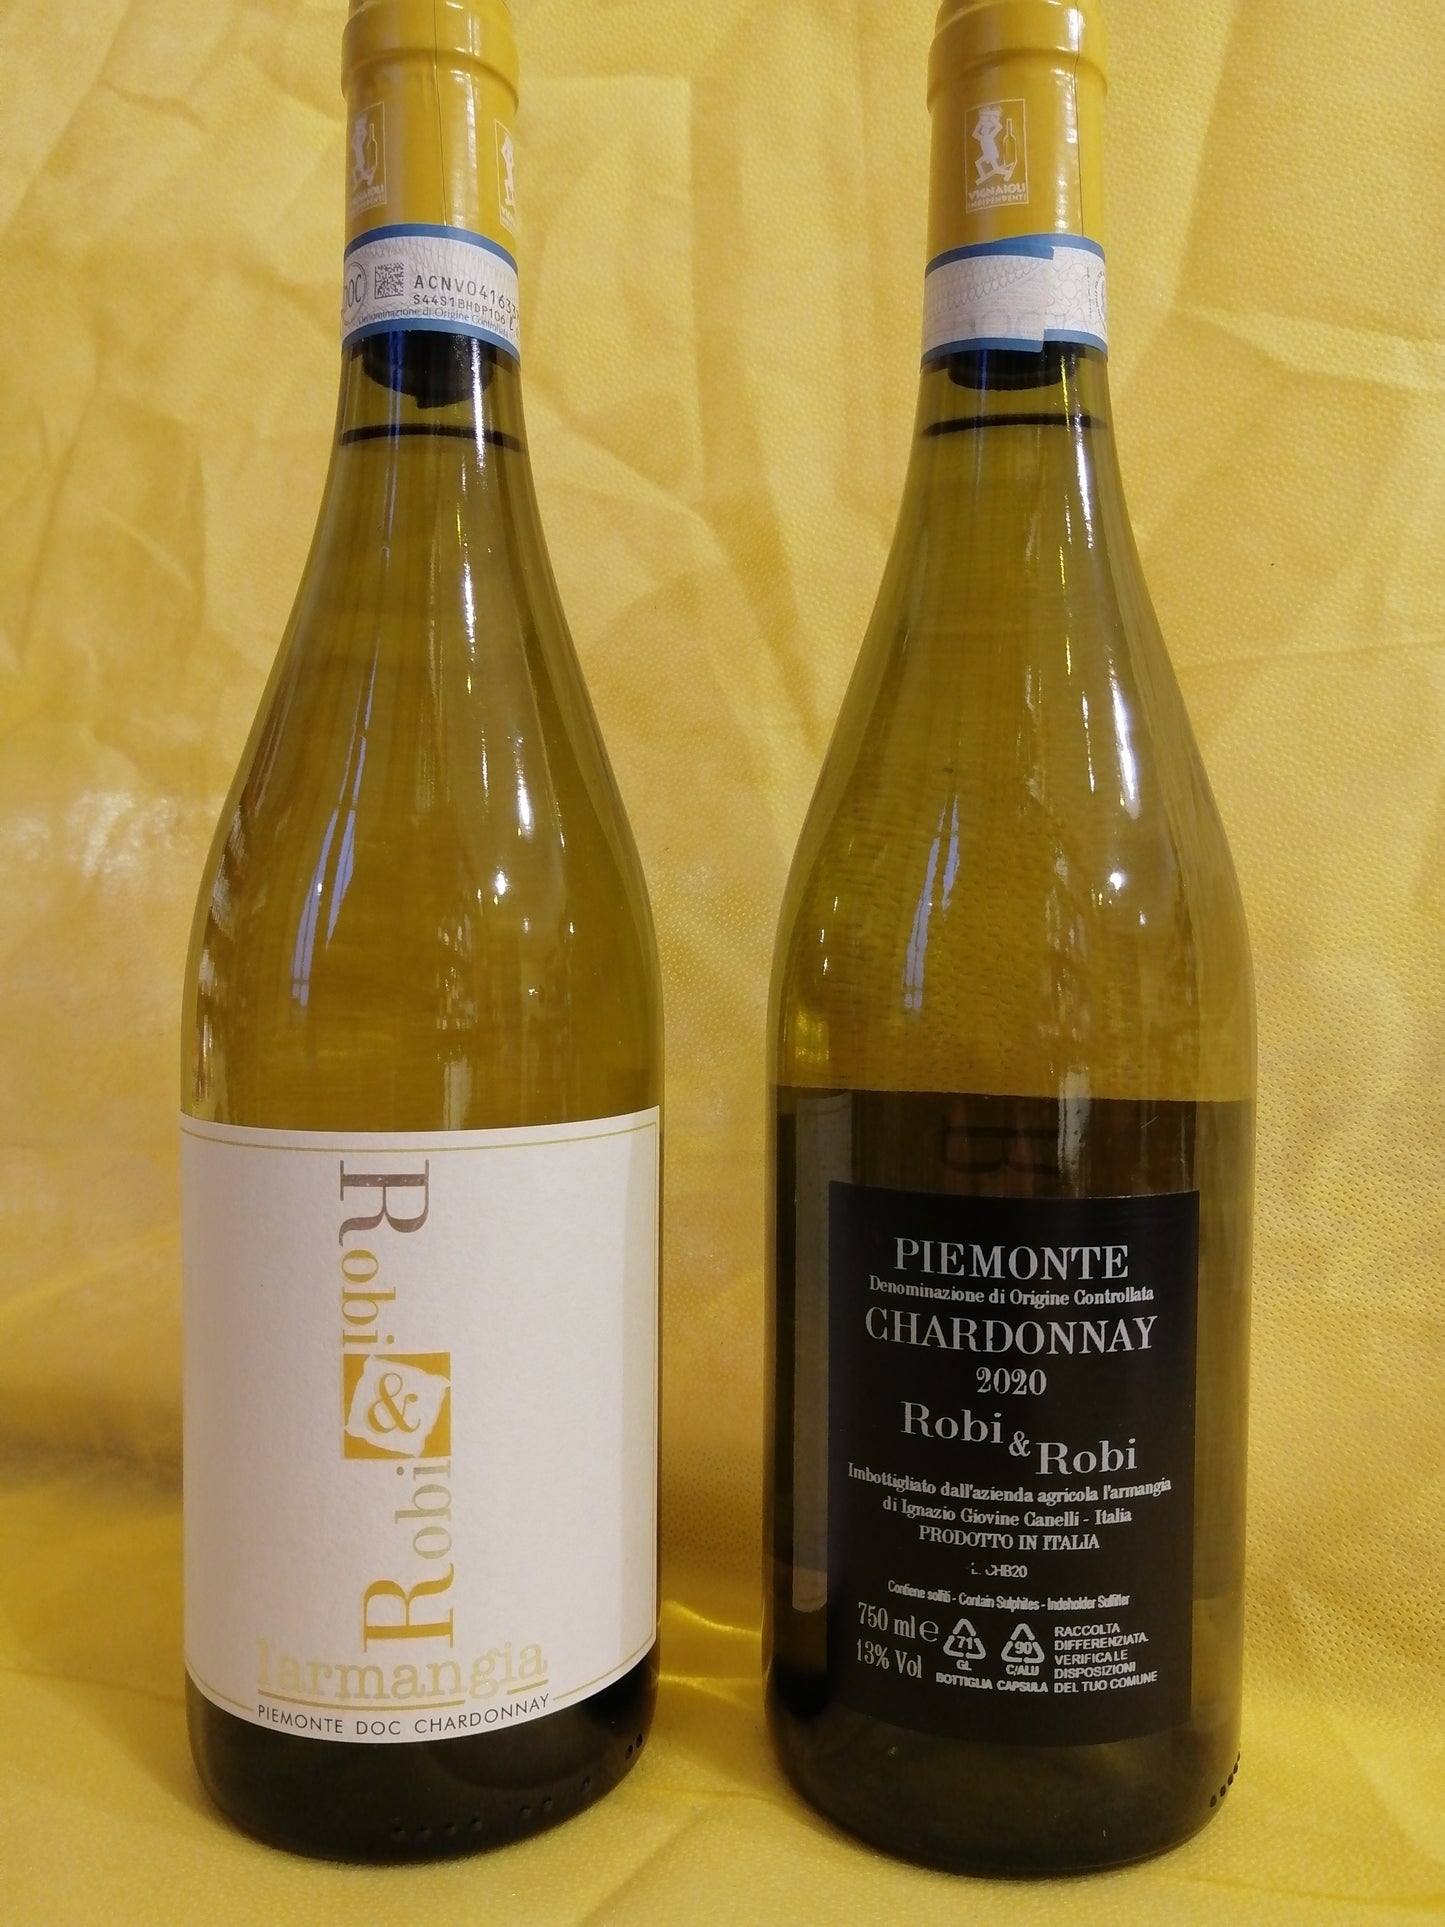 Piemonte DOC Chardonnay "Robi & Robi" - L'Armangia